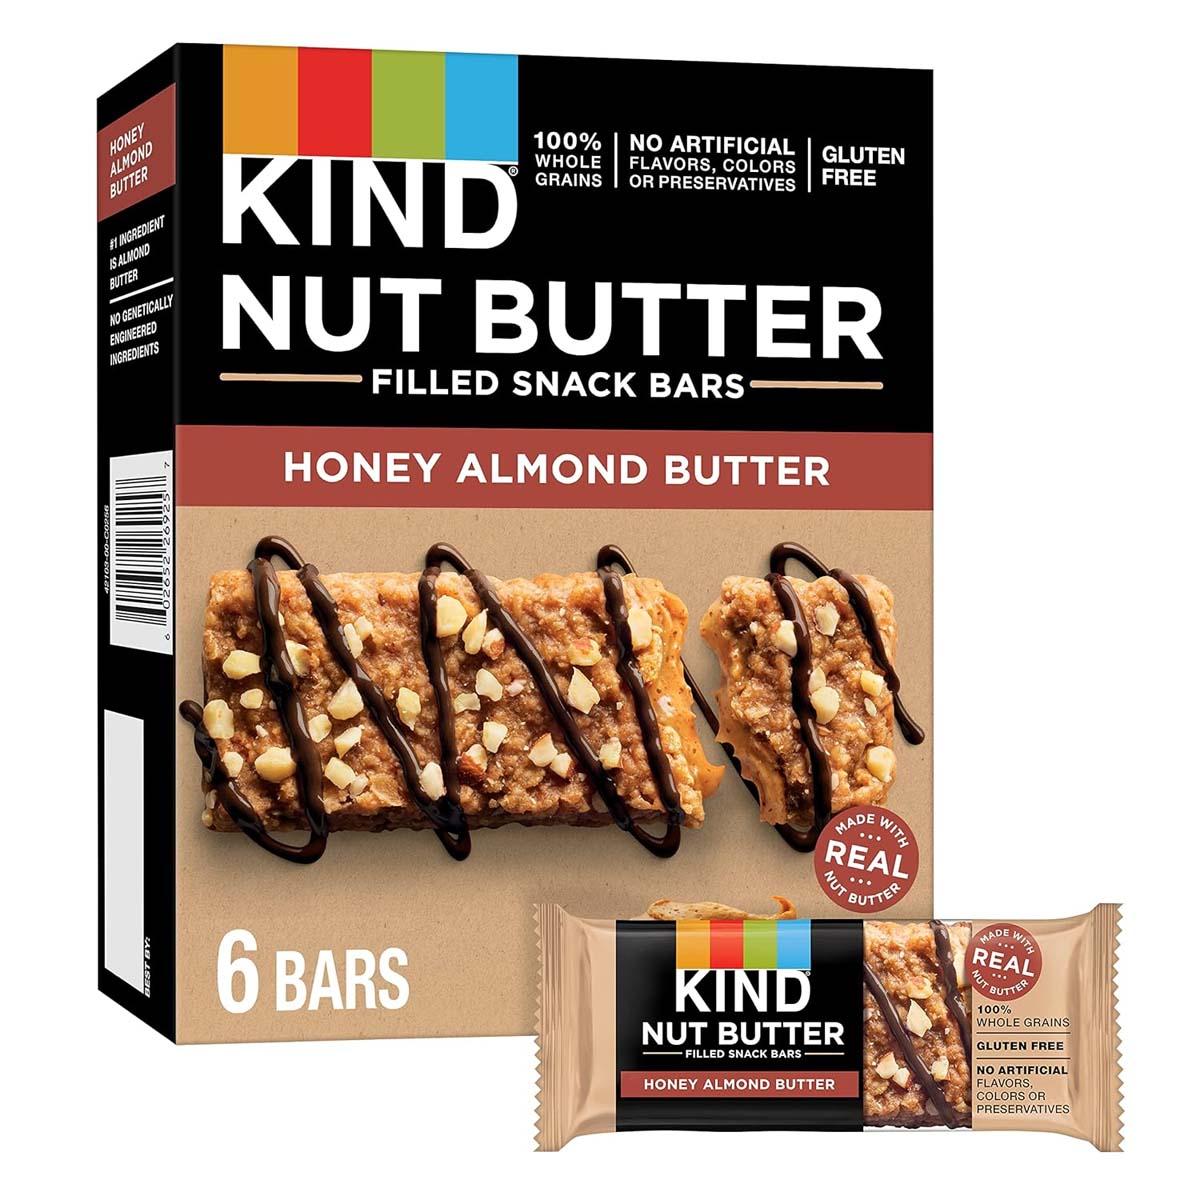 KIND Nut Butter Filled Bars Honey Almond Butter 6 Pack for $2.99